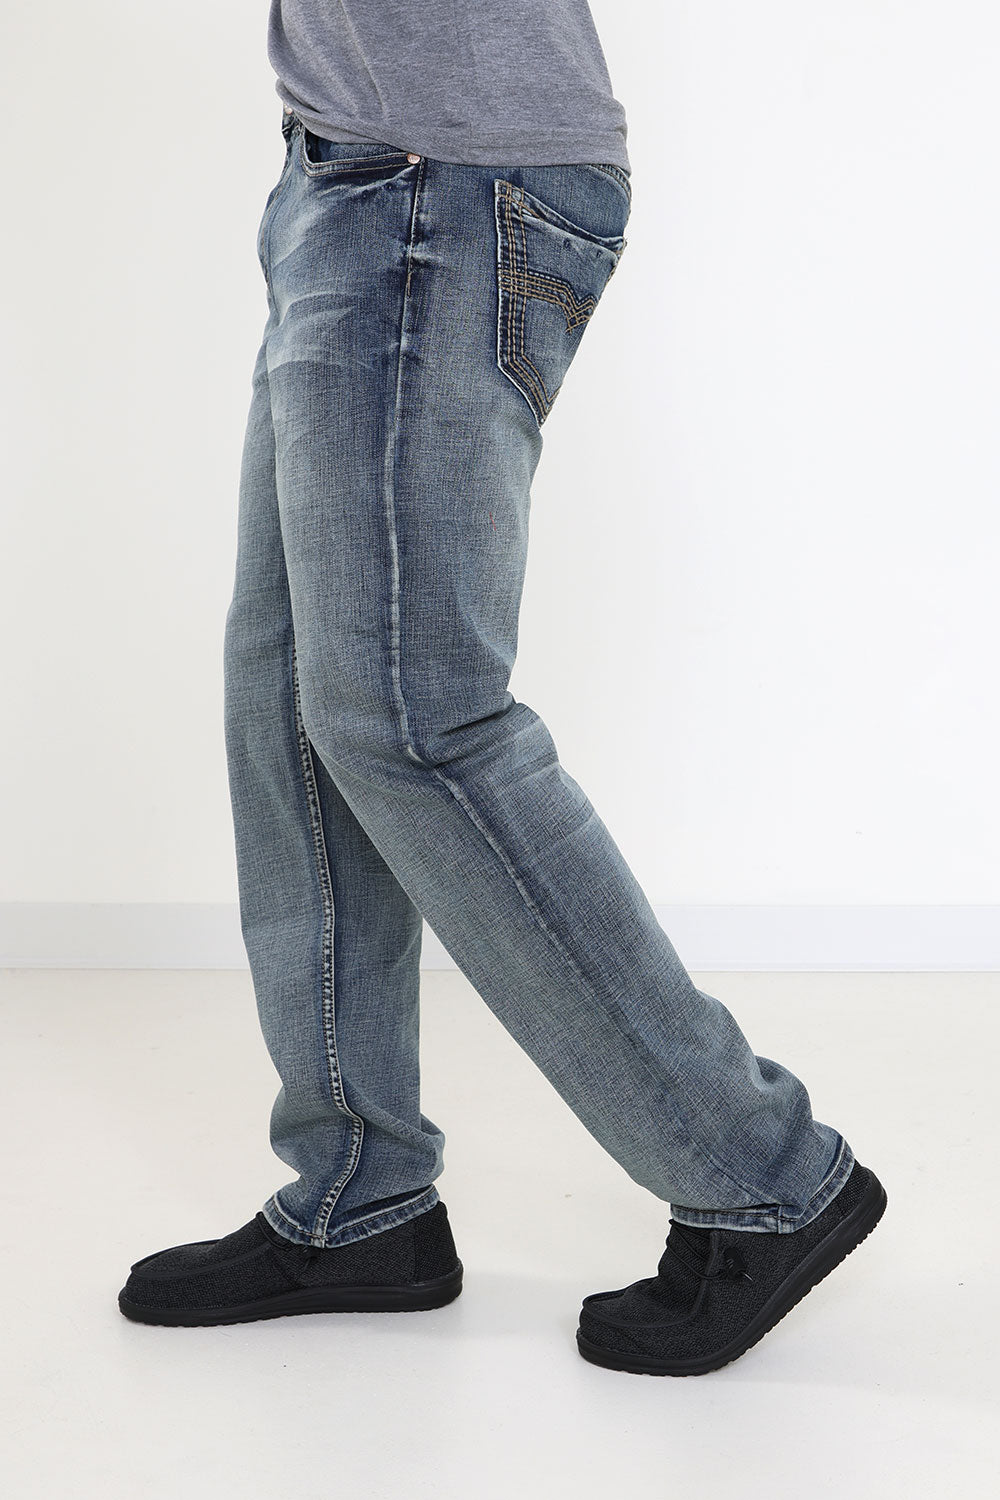 Men's Jeans & Men's Denim